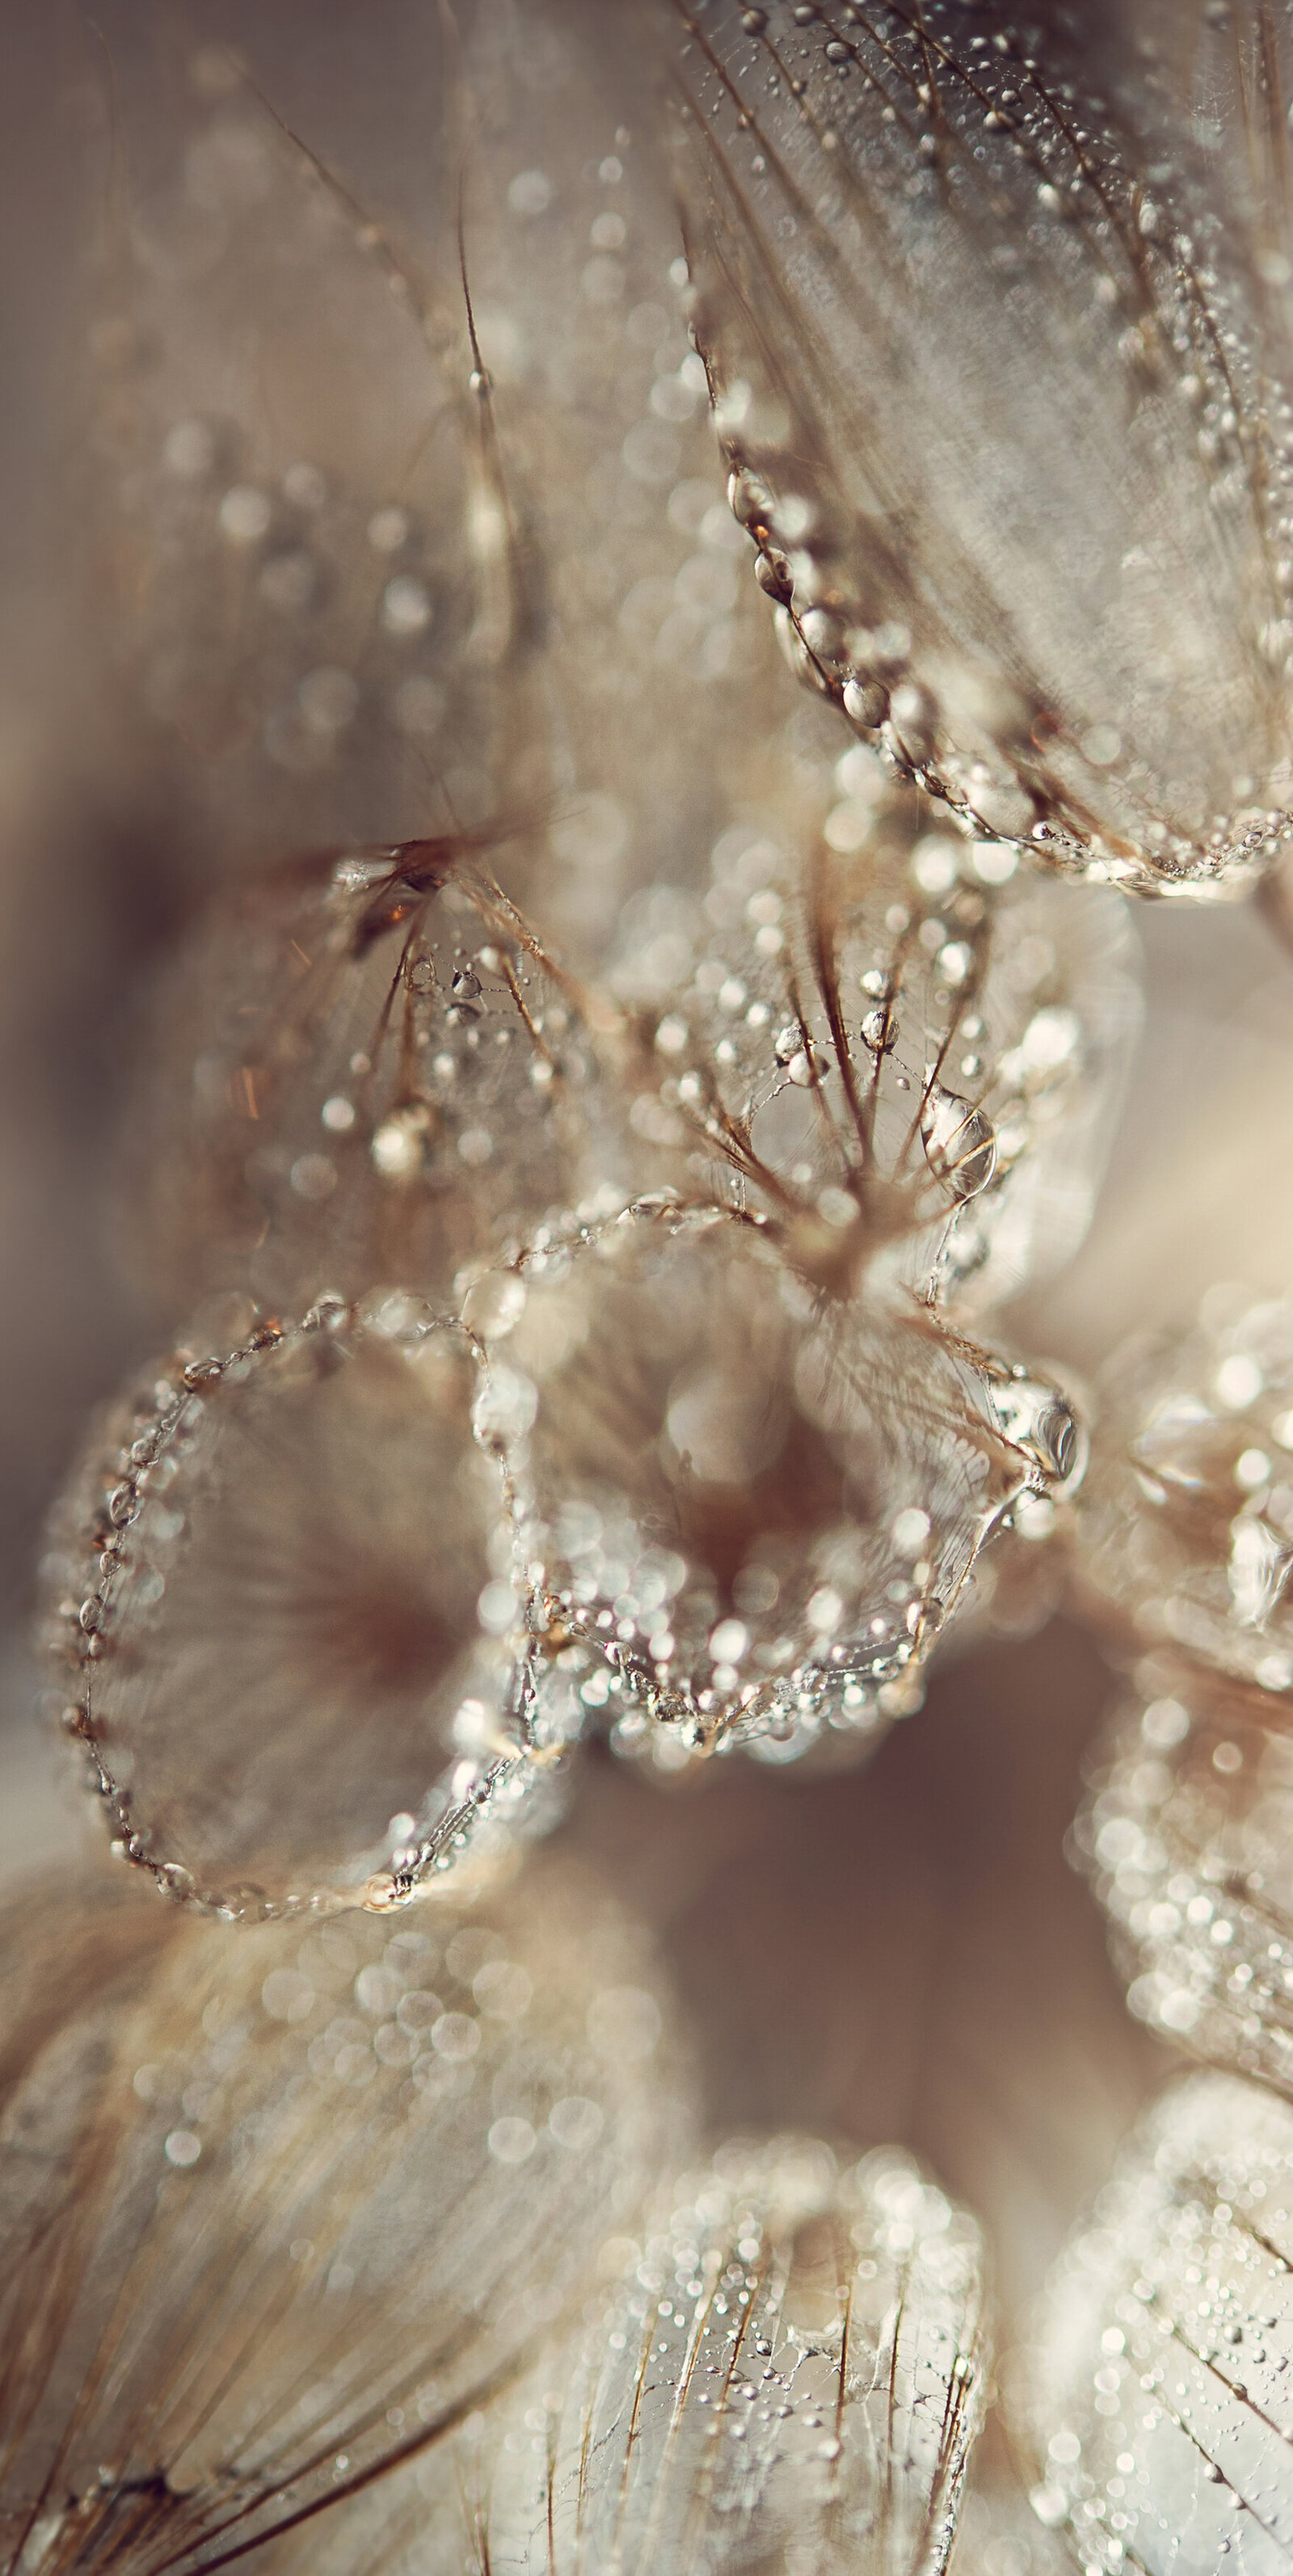 liz allen photography droplets on dandelion-2